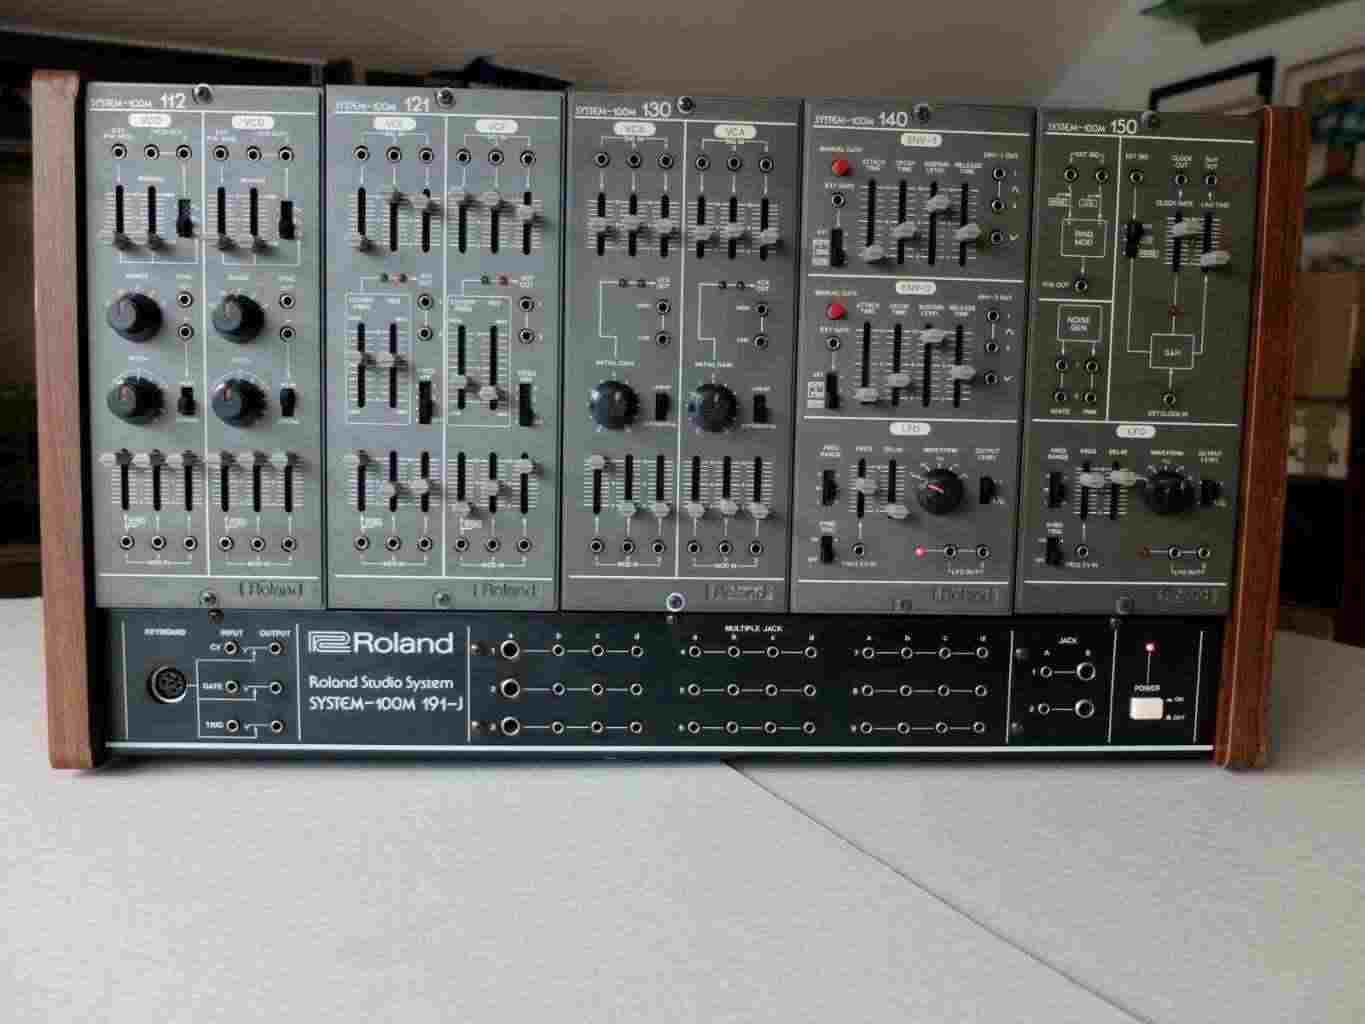 Roland System 100m analogico sintetizzatore modulare, model &quotD"